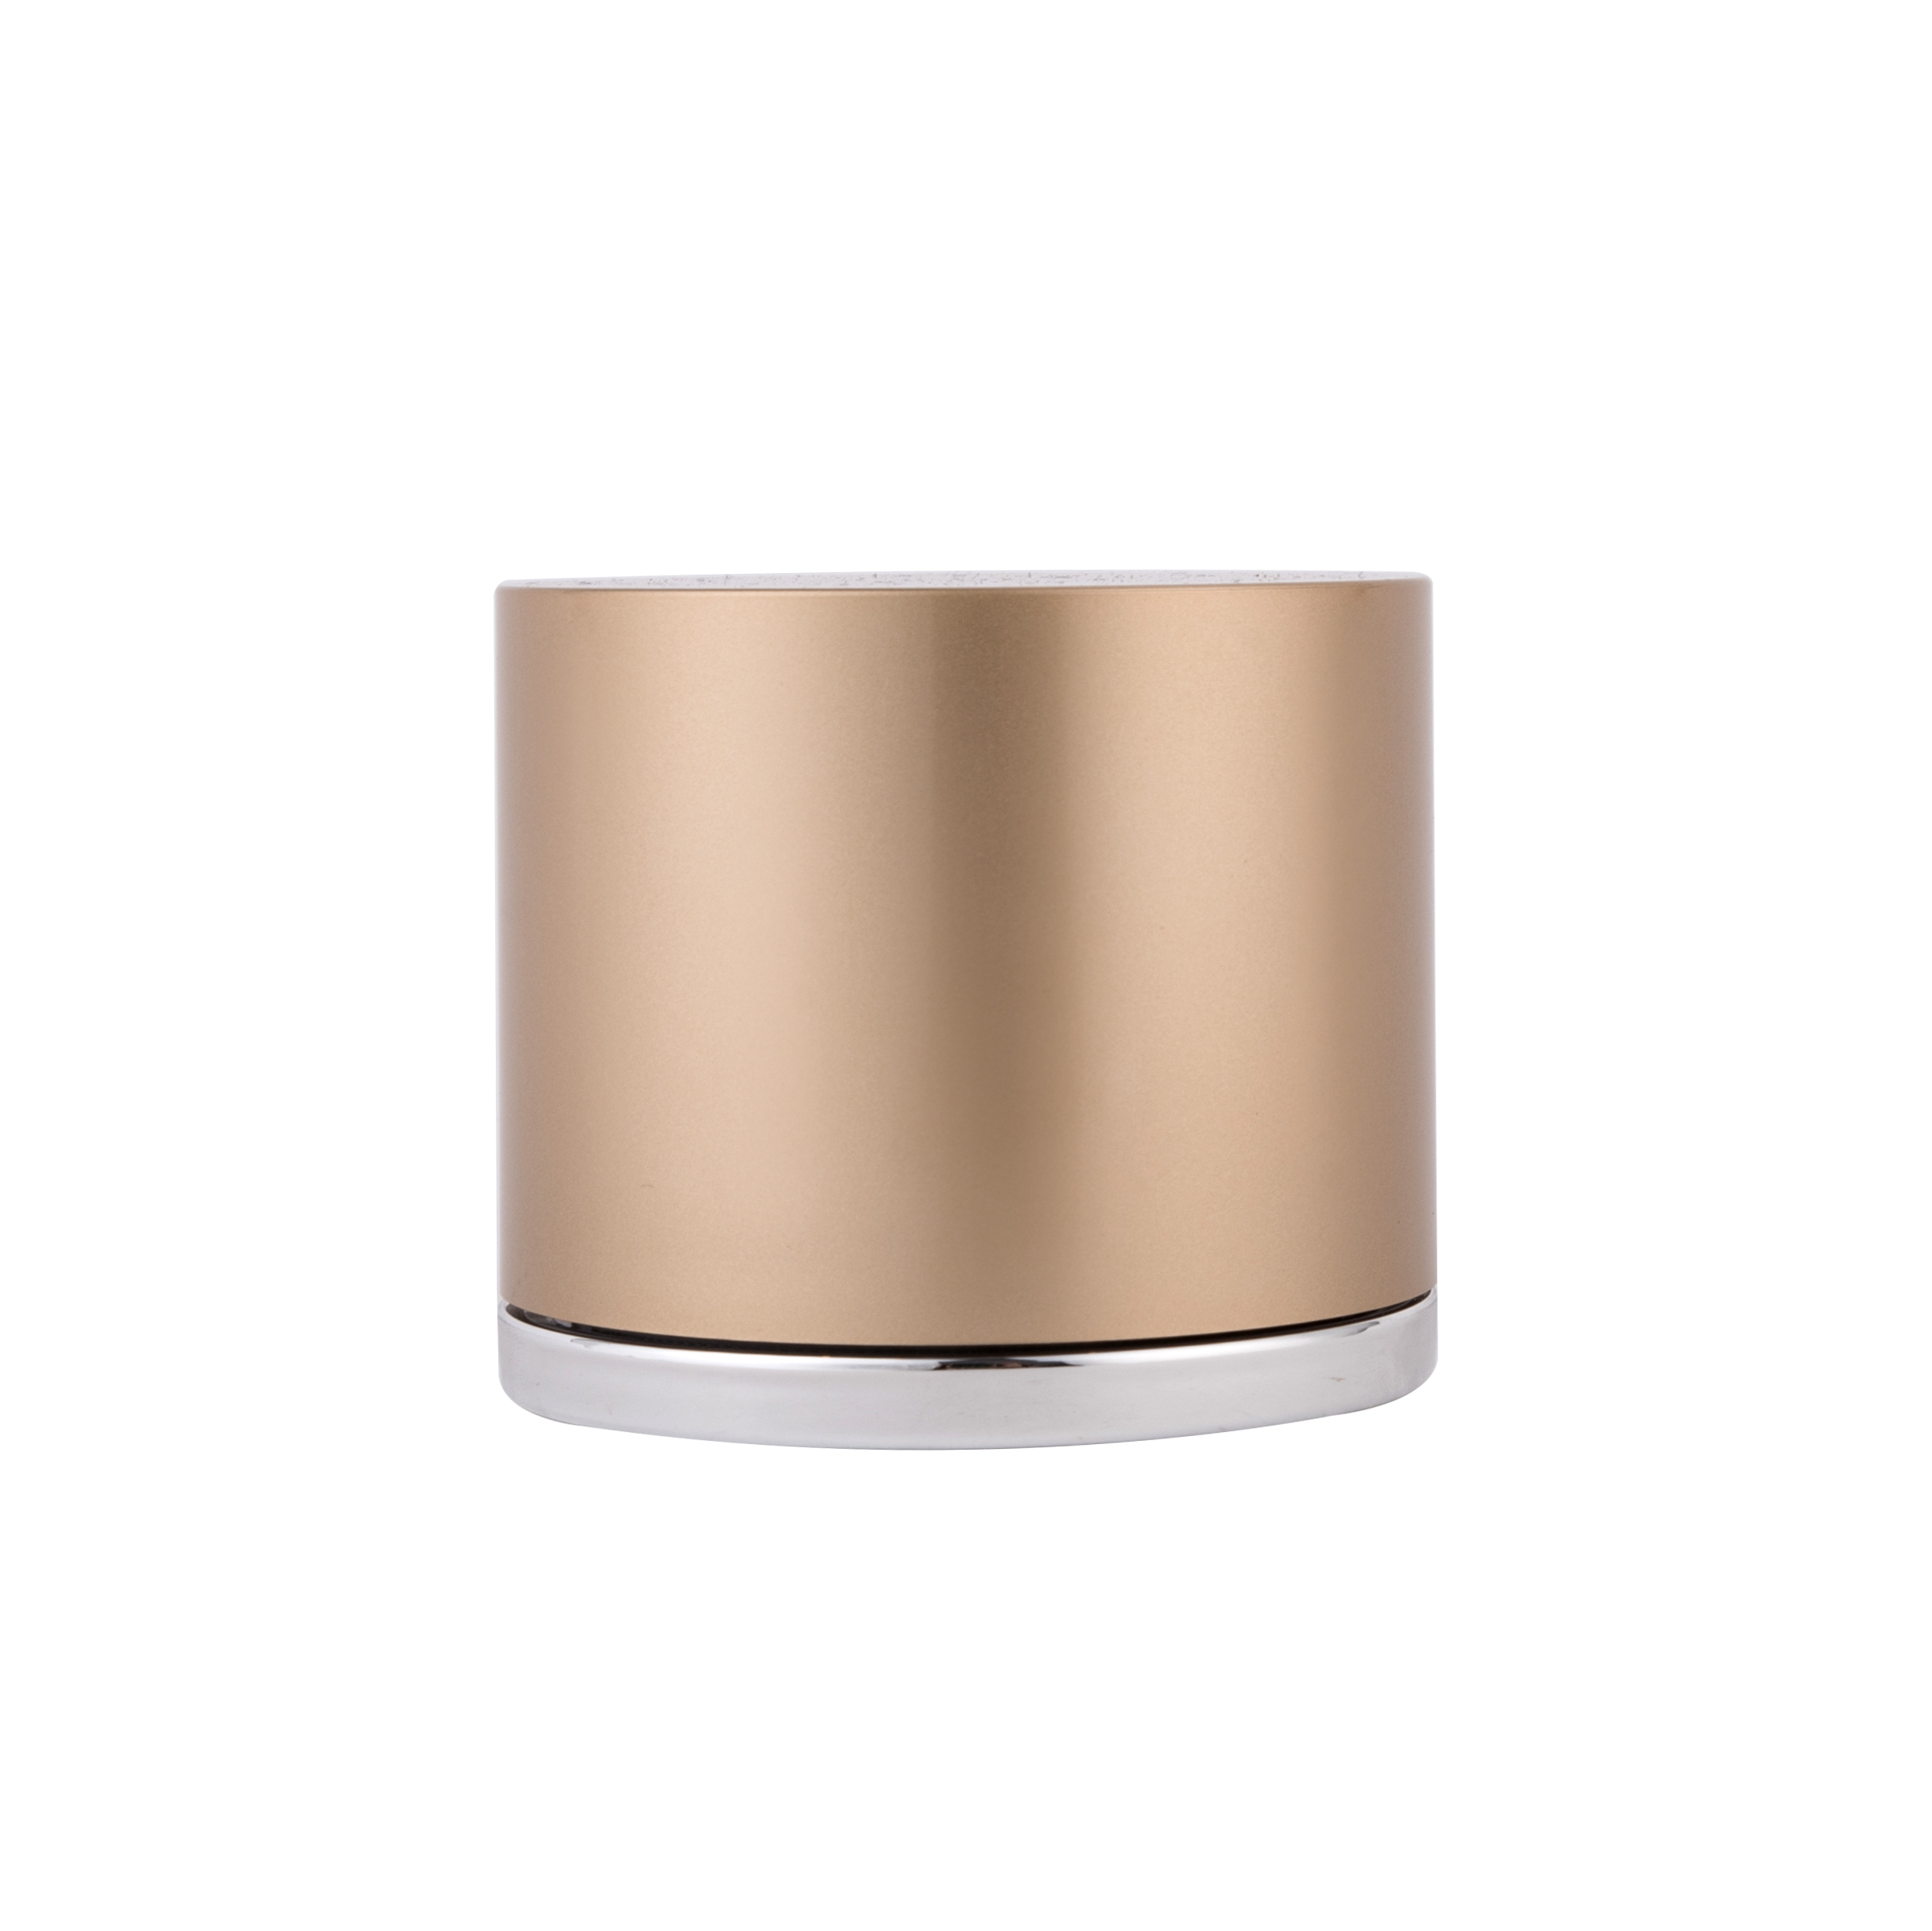 50g Cream Jar For Skincare Wholesale Luxury Sustainable Cosmetci Jar 